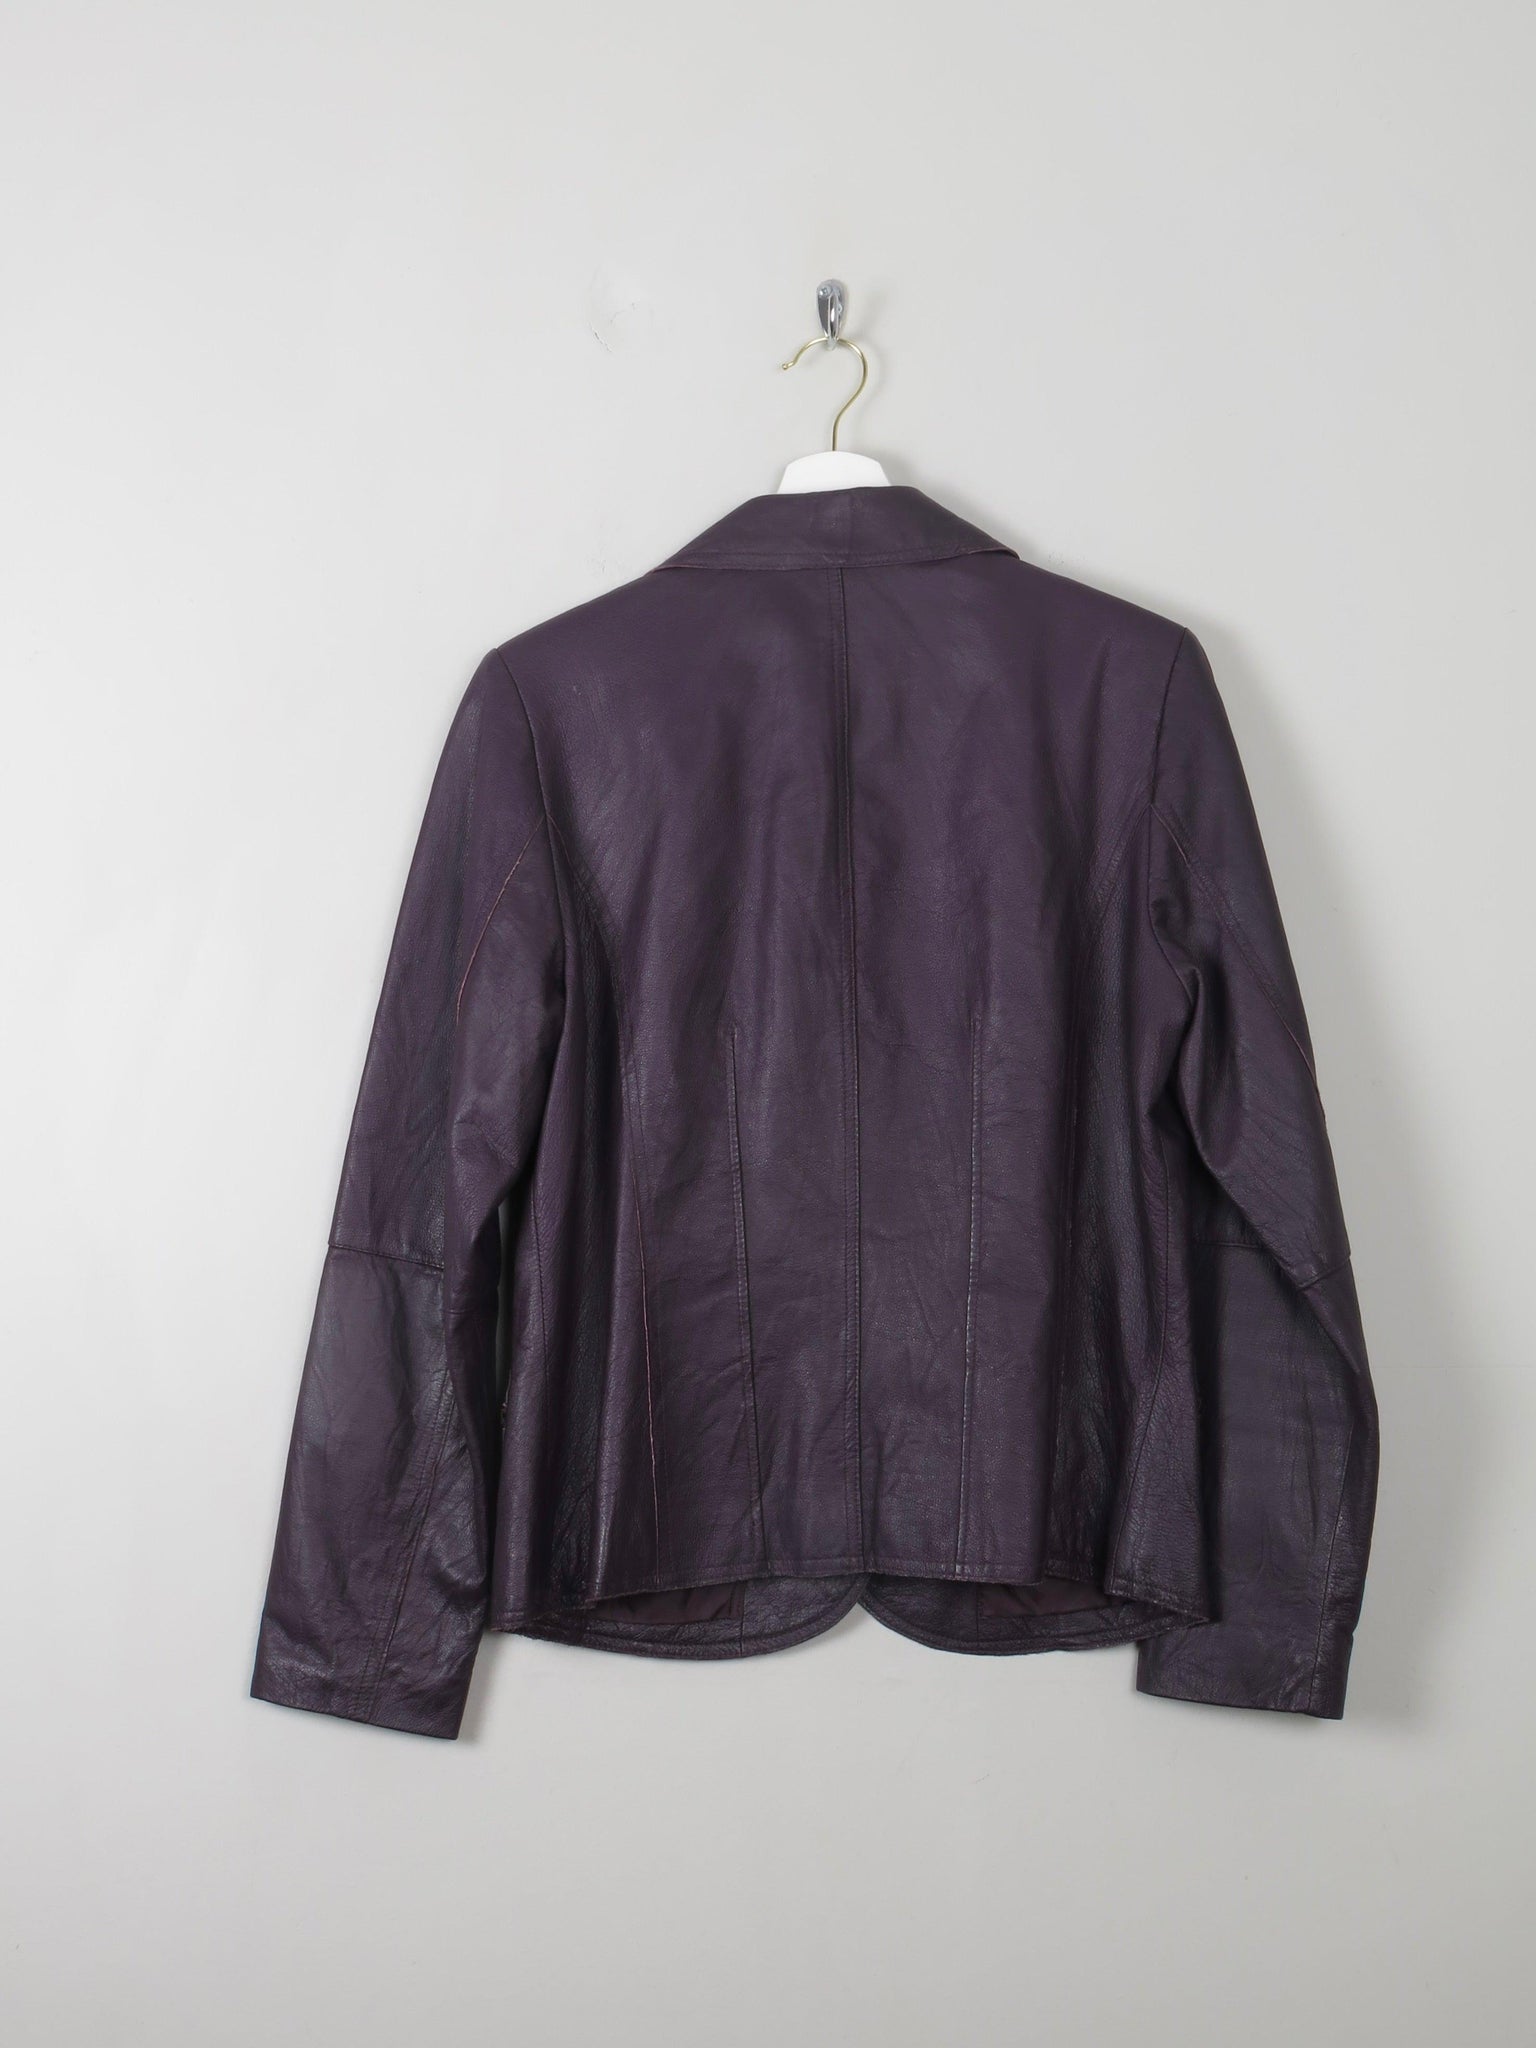 Women's Vintage Leather Jacket Grape S/M - The Harlequin